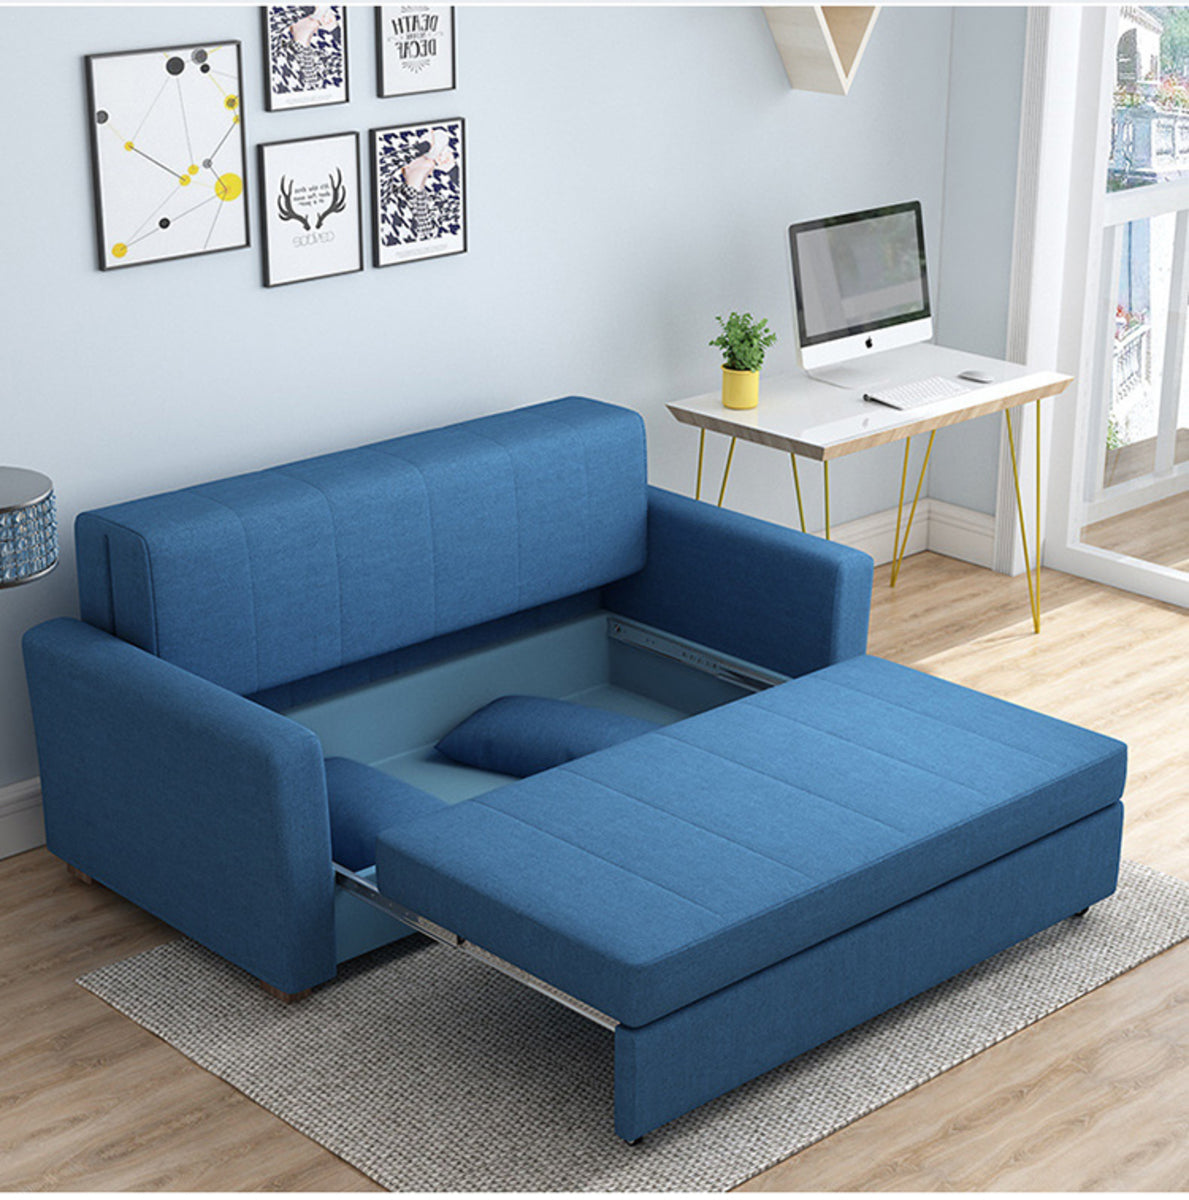 MerryRabbit - 175cm多功能布藝三座位儲物梳化床MR-6019 3 seater Multi - functional fabric Sofa bed with storage 1.75 meter